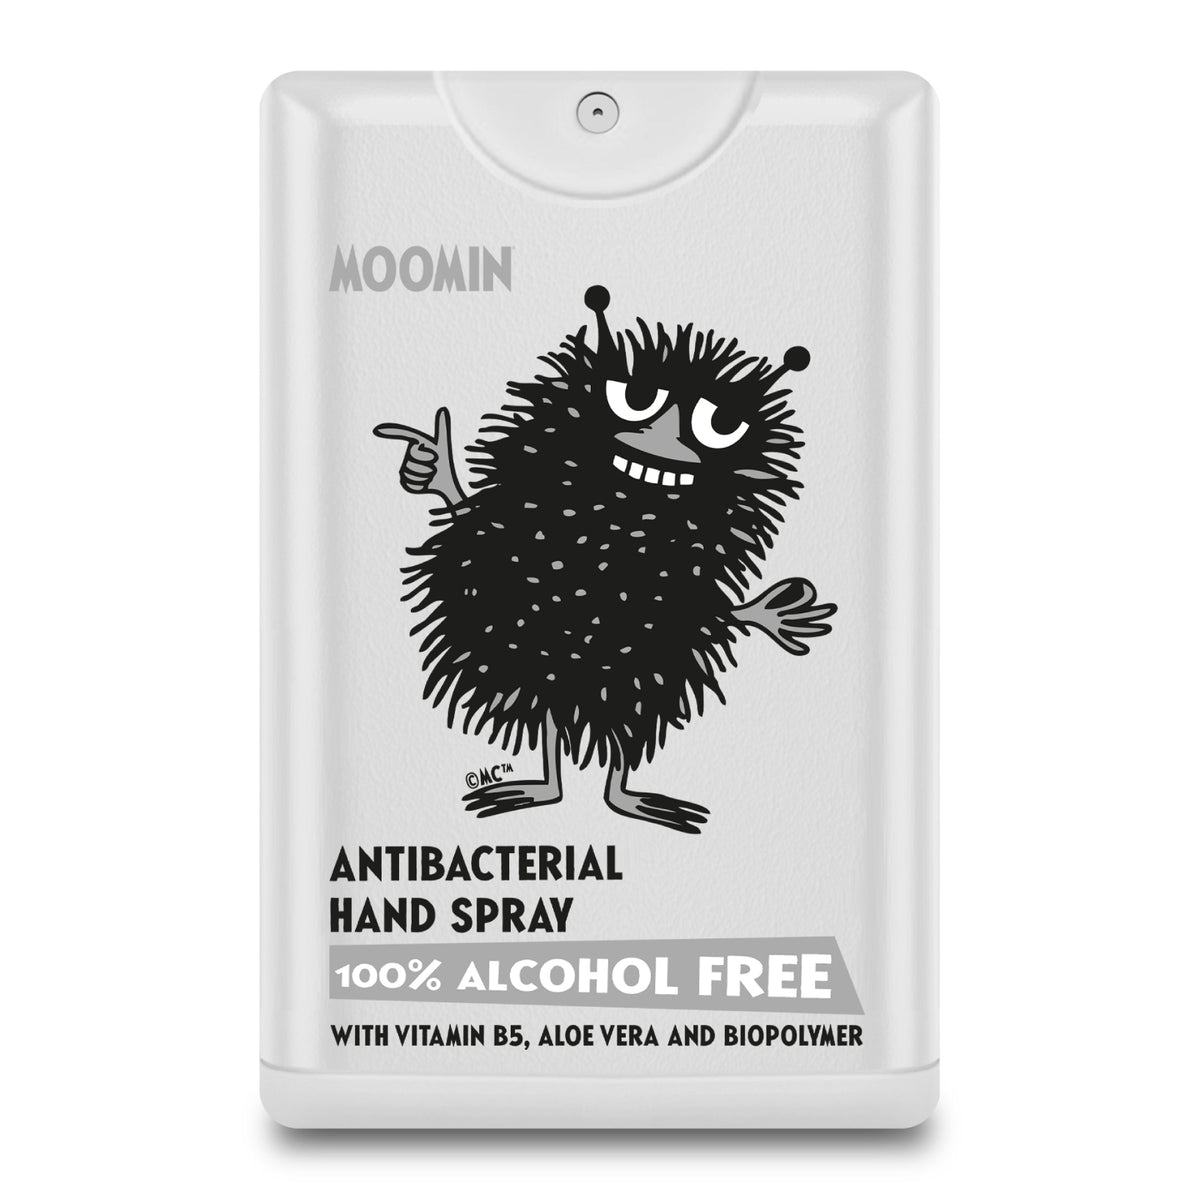 Moomin Hand Sanitizer - of Sweden